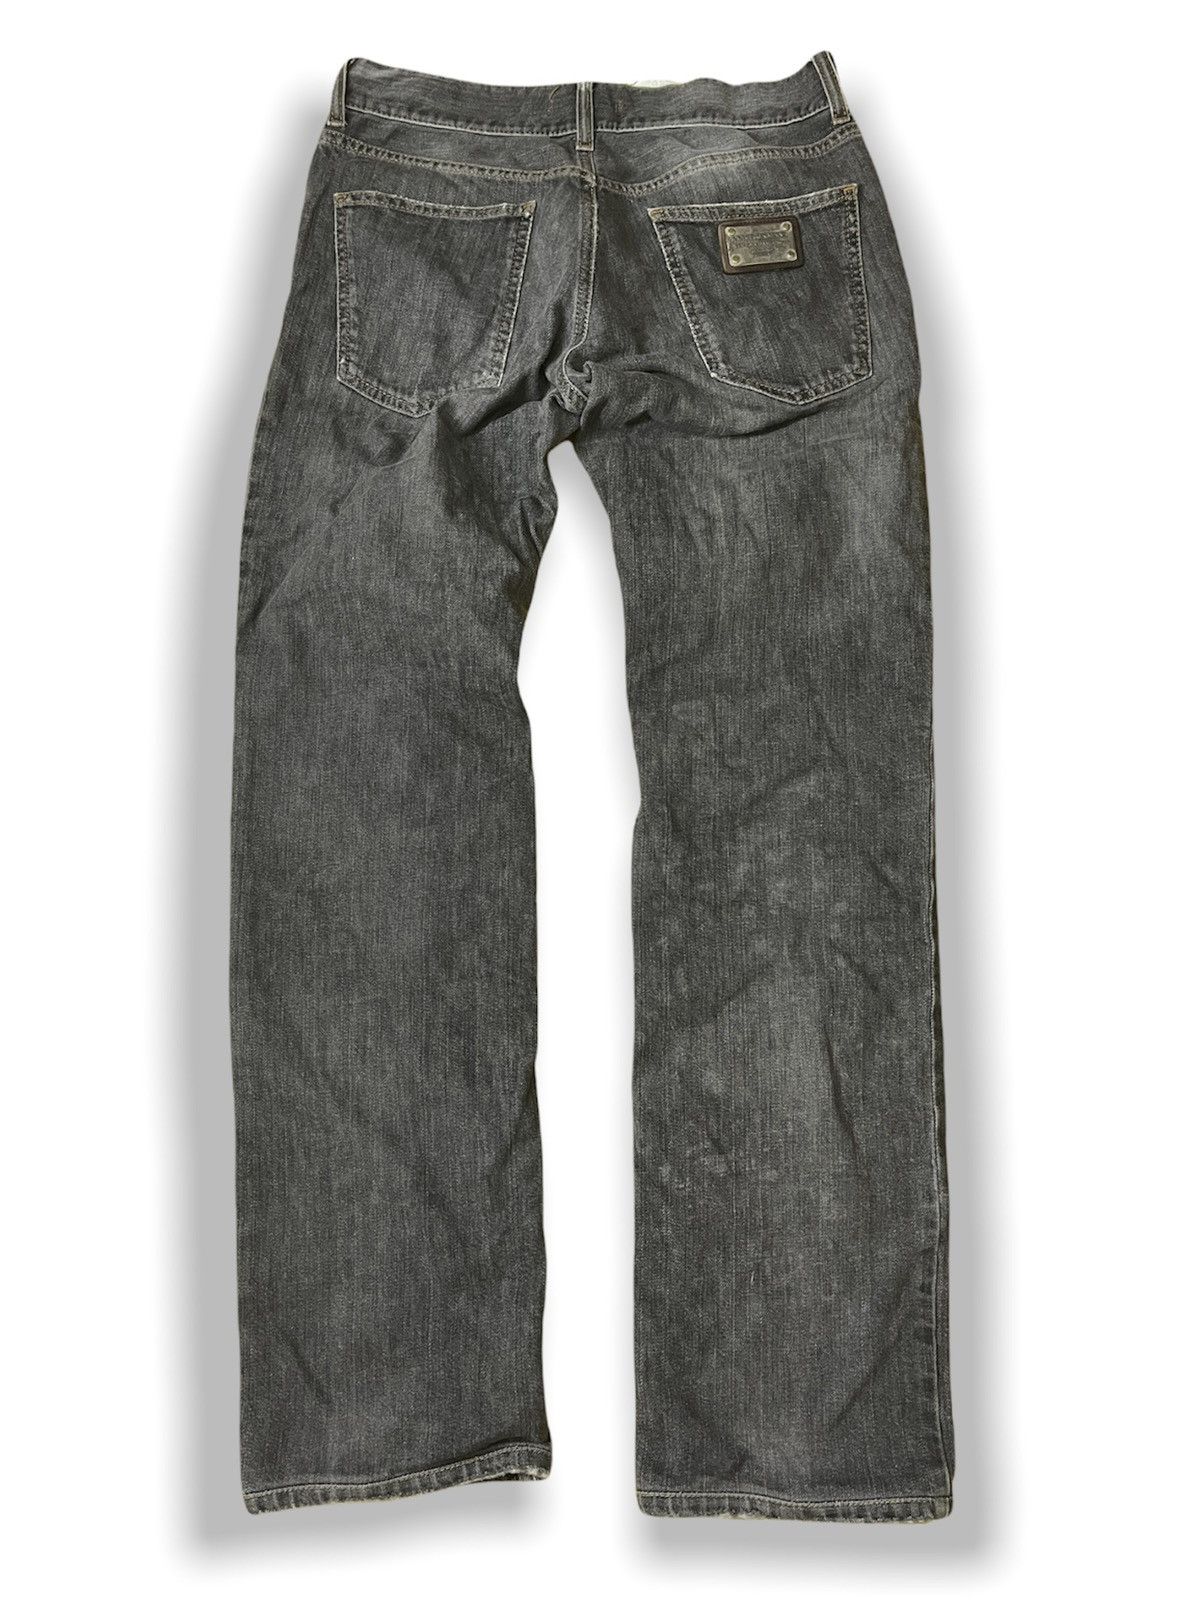 Vintage 1980s Distressed DOLCE & GABBANA Denim Jeans - 11